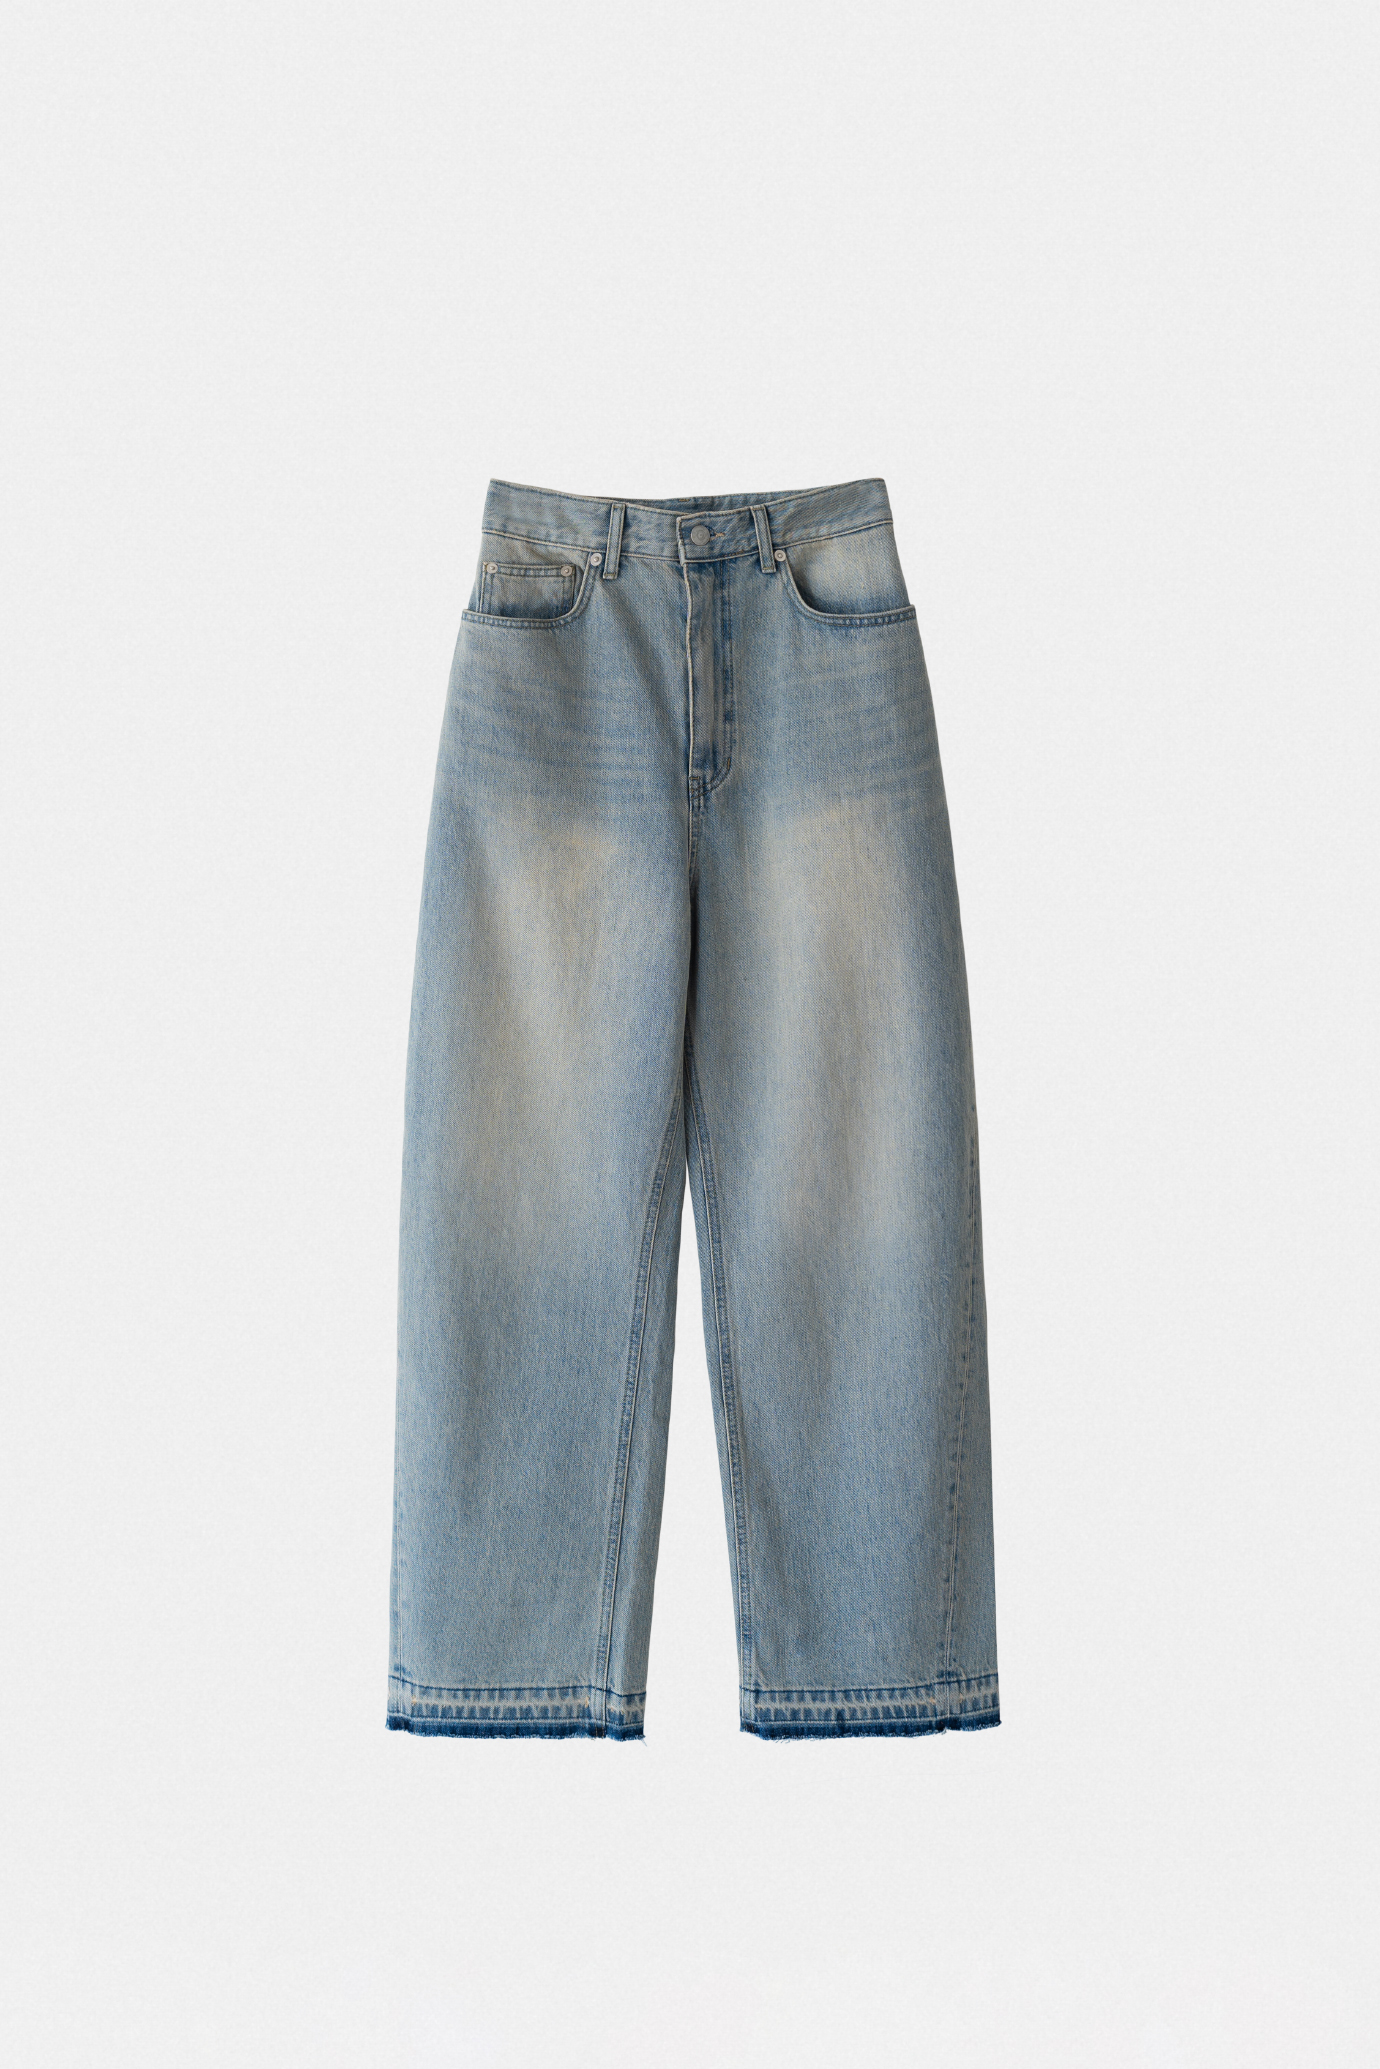 19533_Vintage Loose-fit Jeans